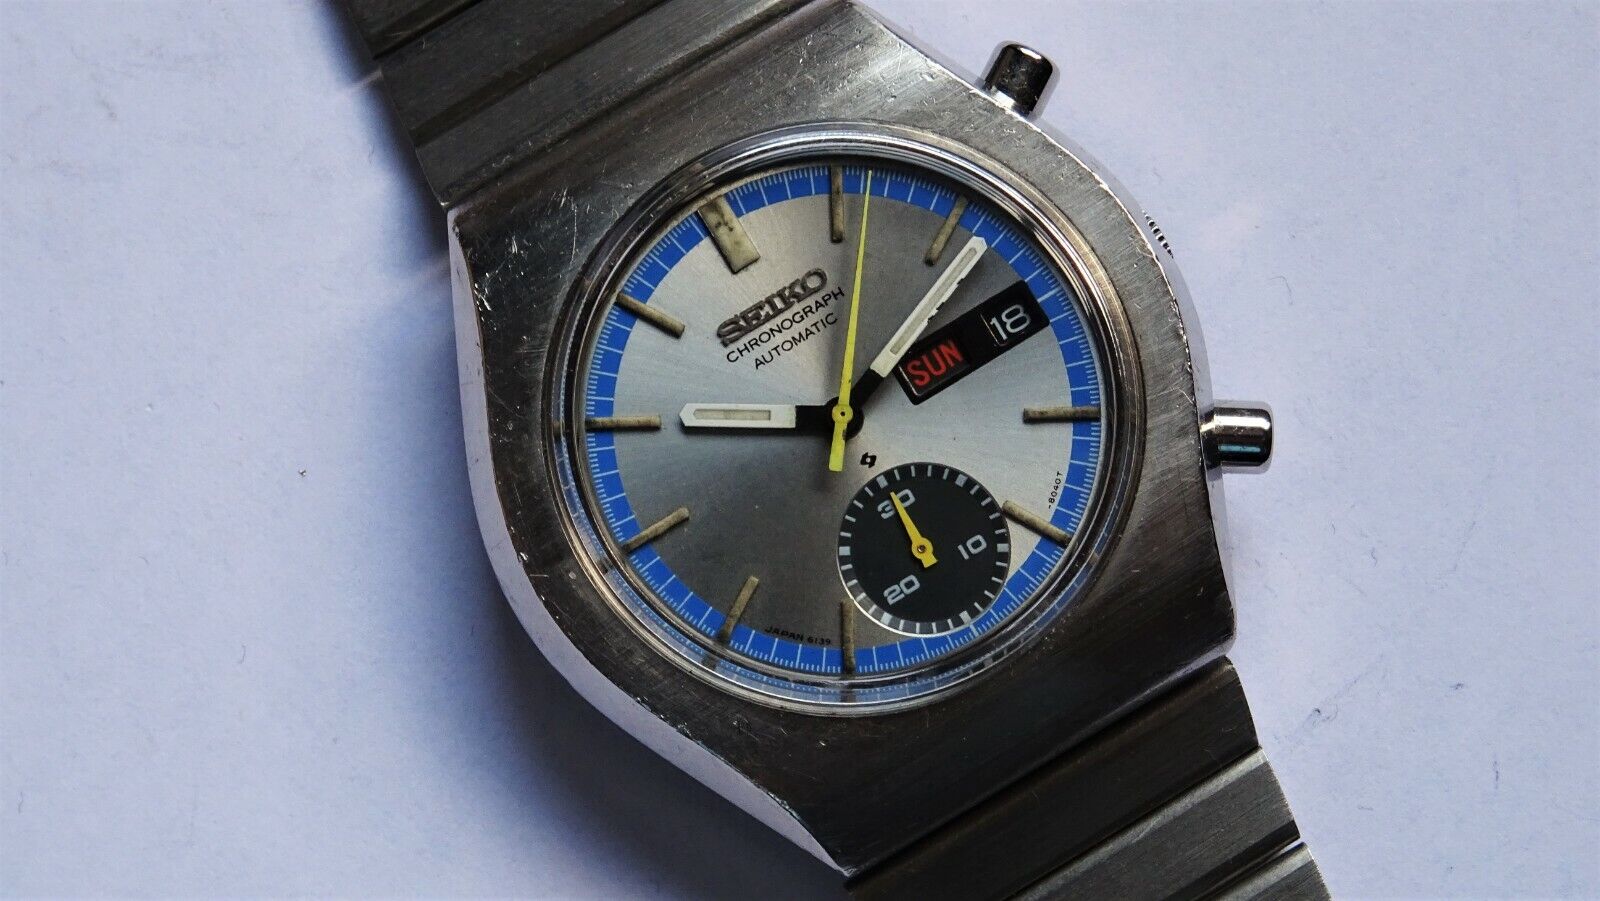 SEIKO 6139-8020 Vintage Chronograph Watch | eBay